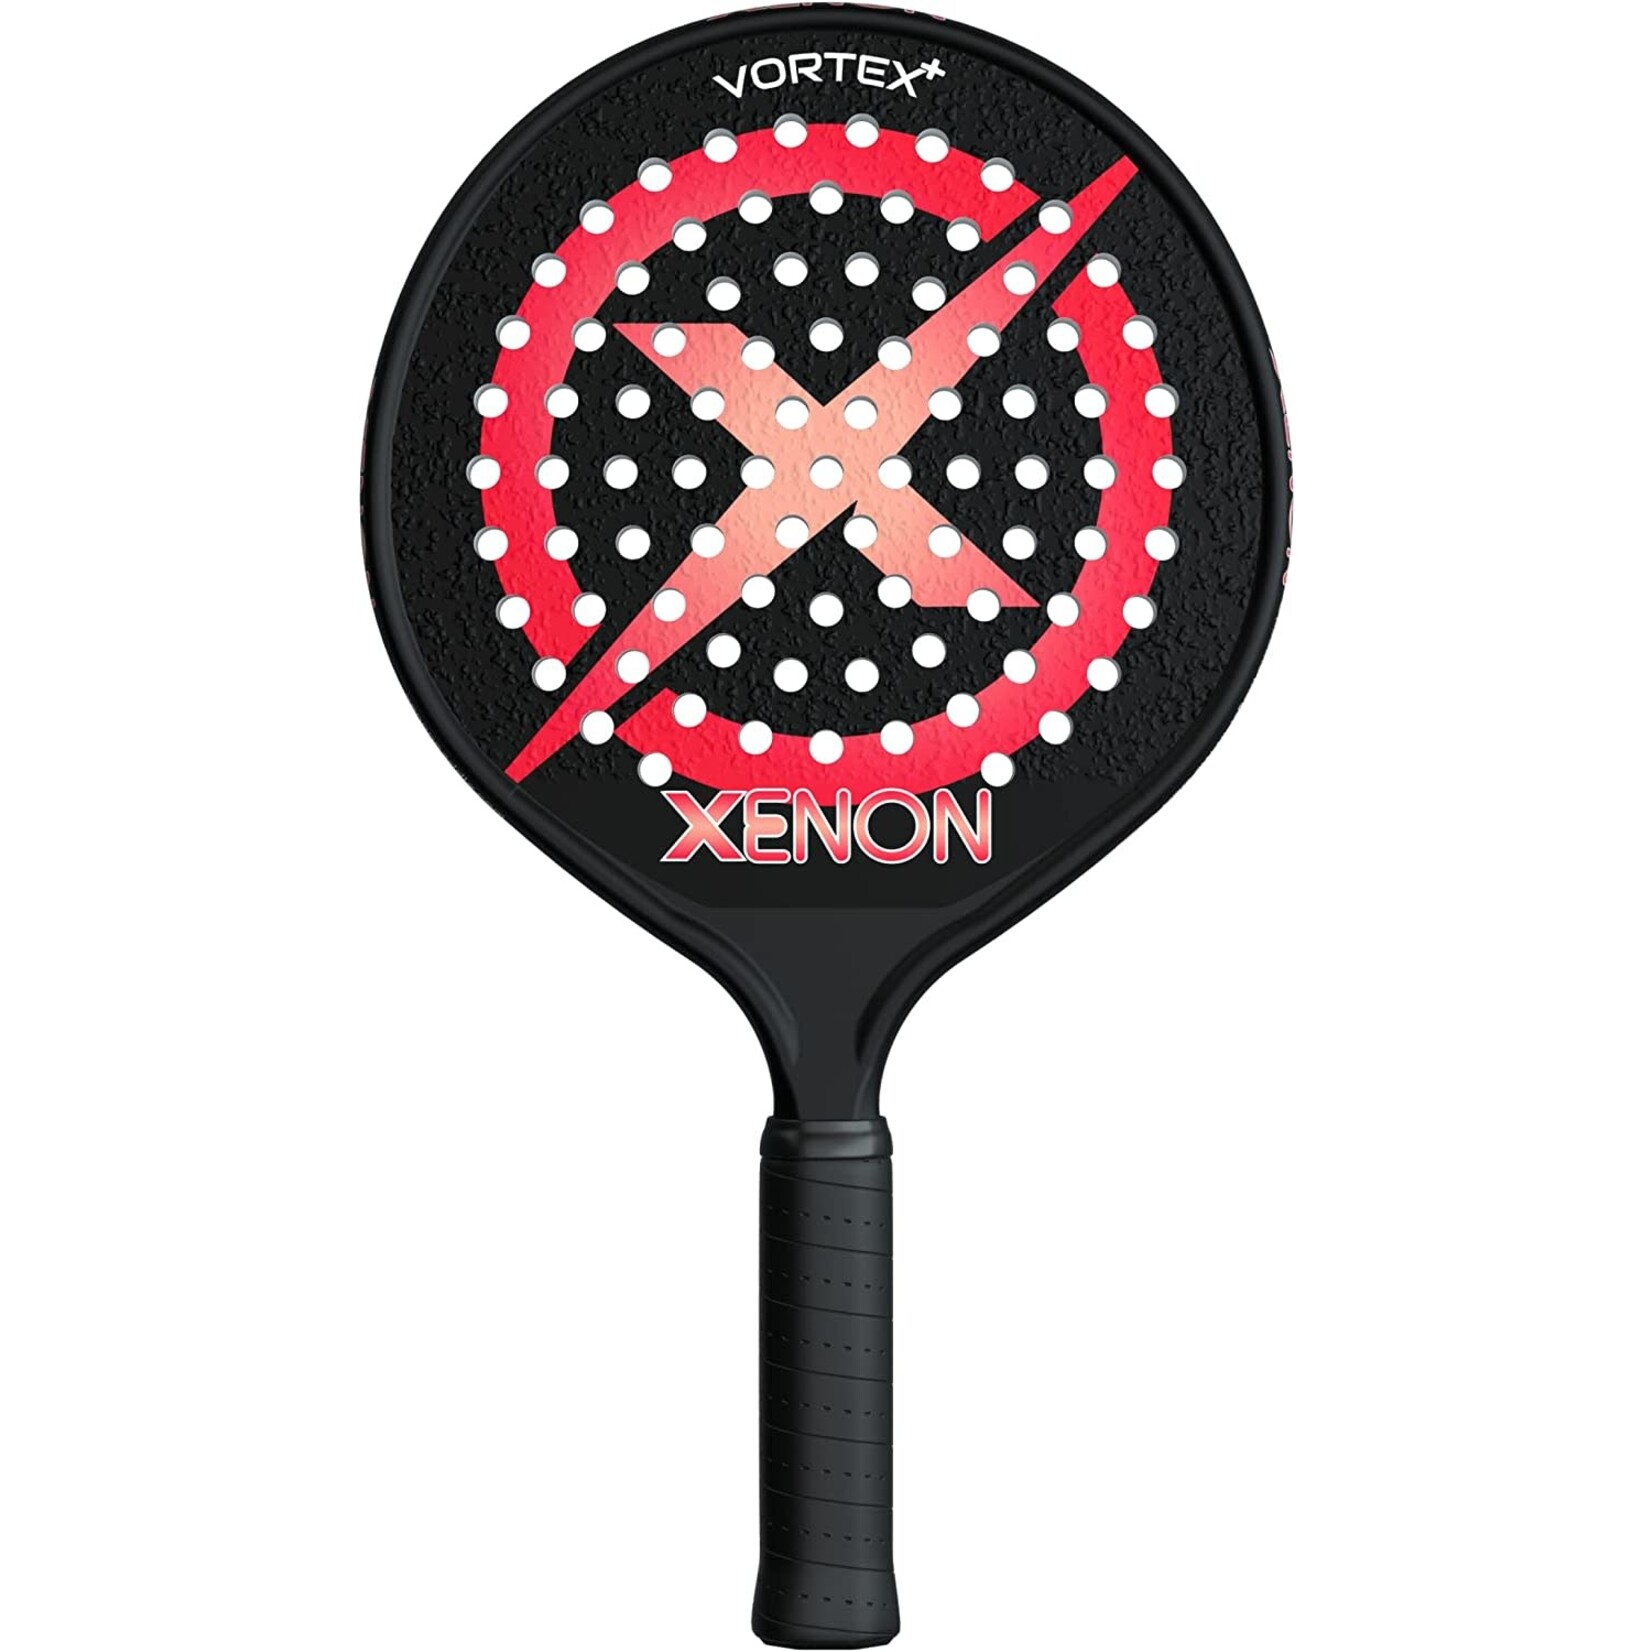 Xenon Xenon Paddle Vortex+